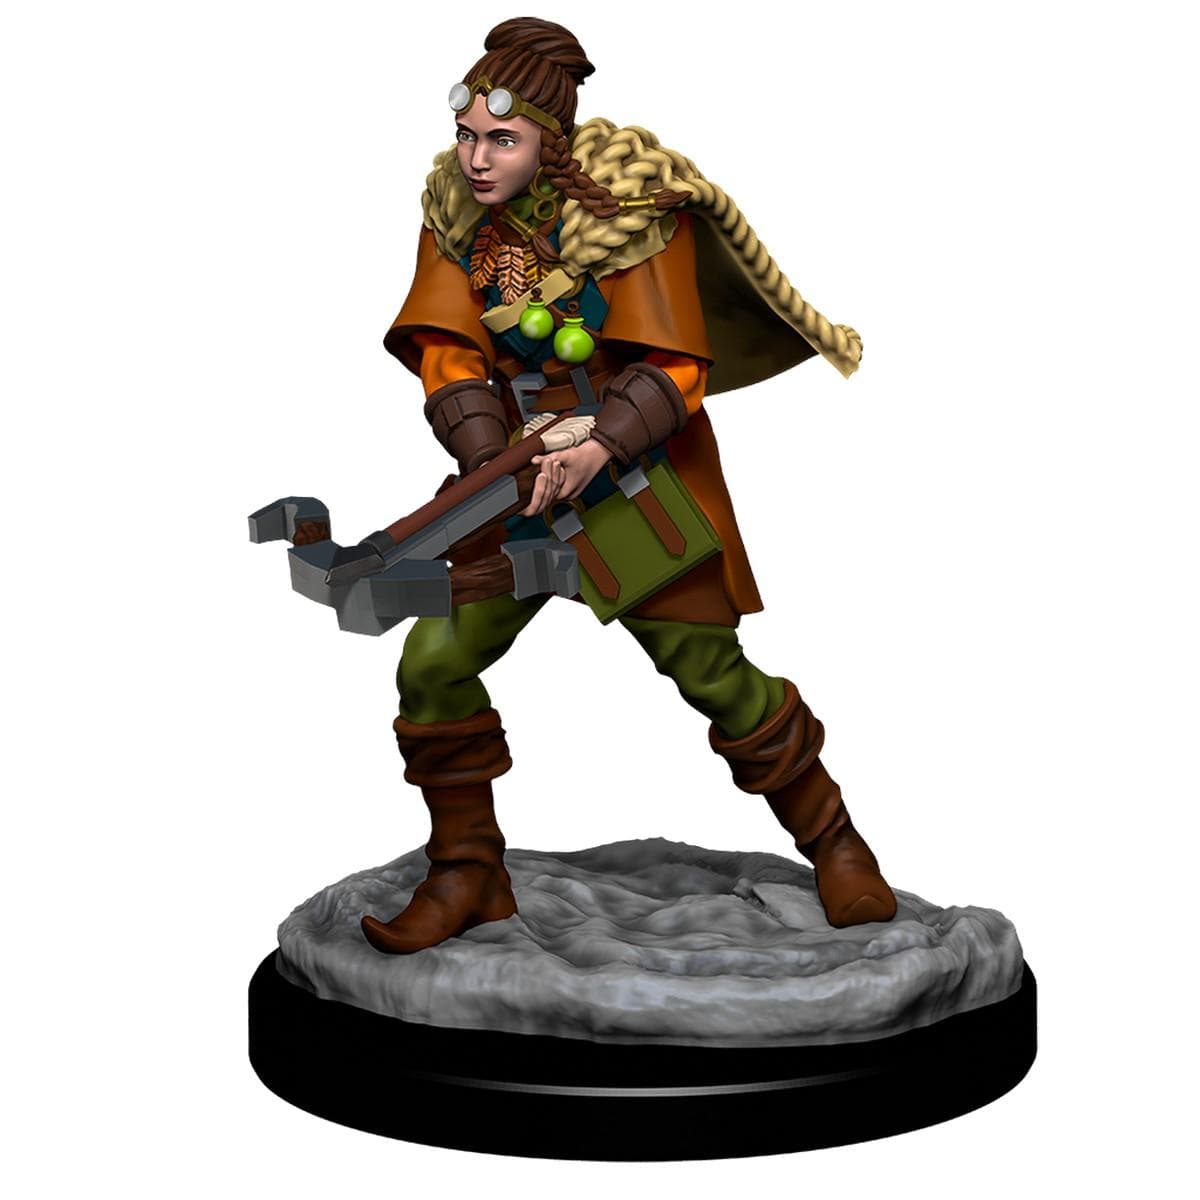 NordicDice rollespilsfigurer Dungeons and Dragons: Nolzur's Marvelous Miniatures - Female Human Ranger